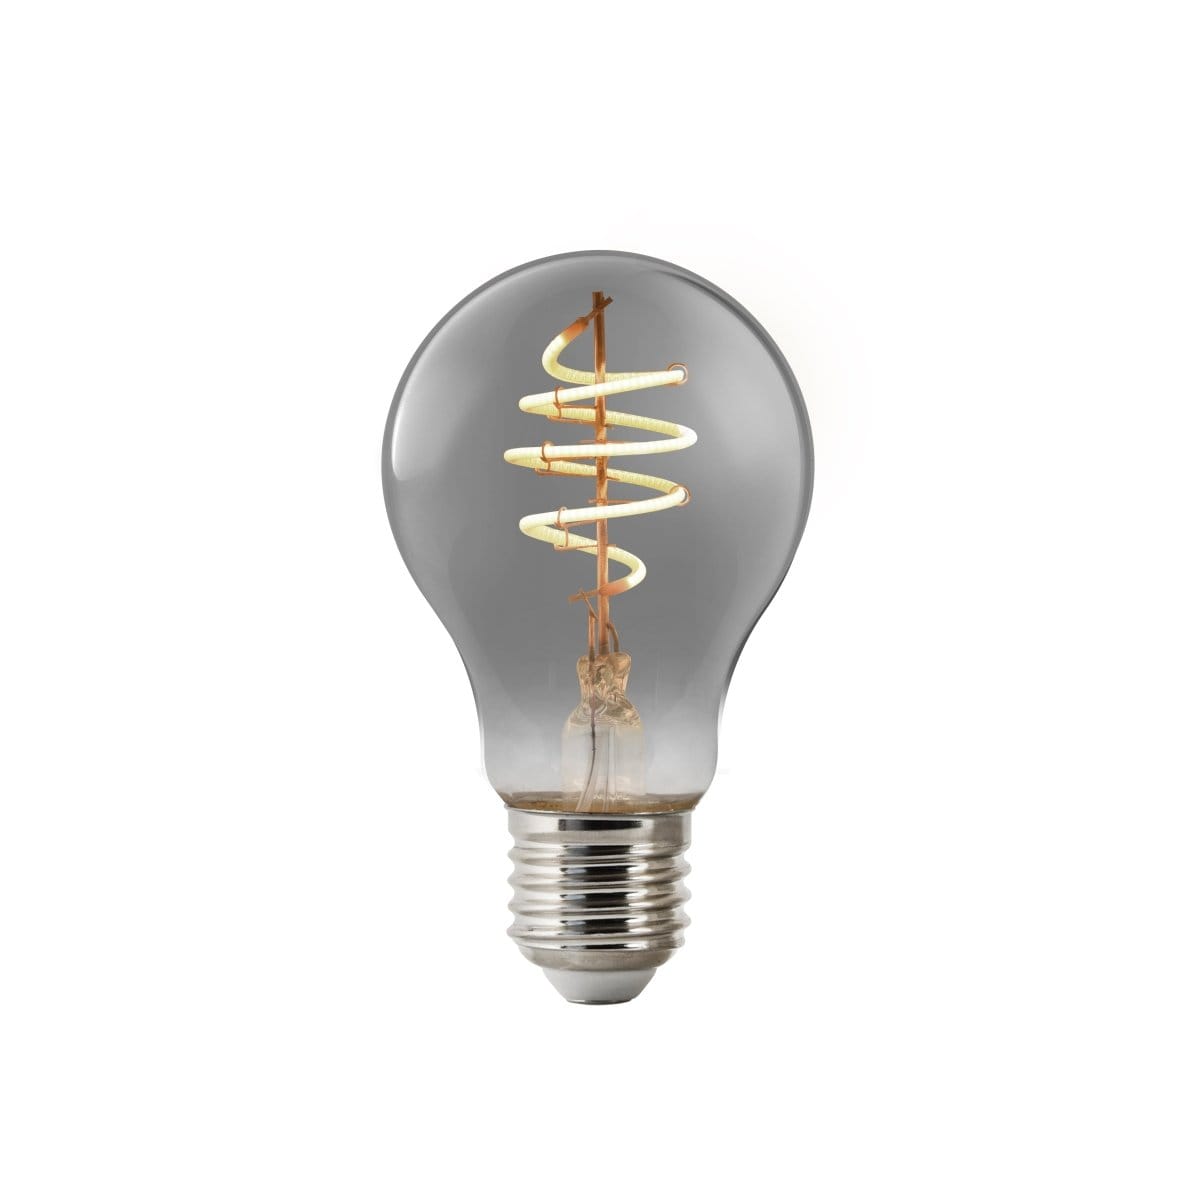 Heavenly Chandeliers Light Bulbs Decorative Smart Light Bulb E27, A60